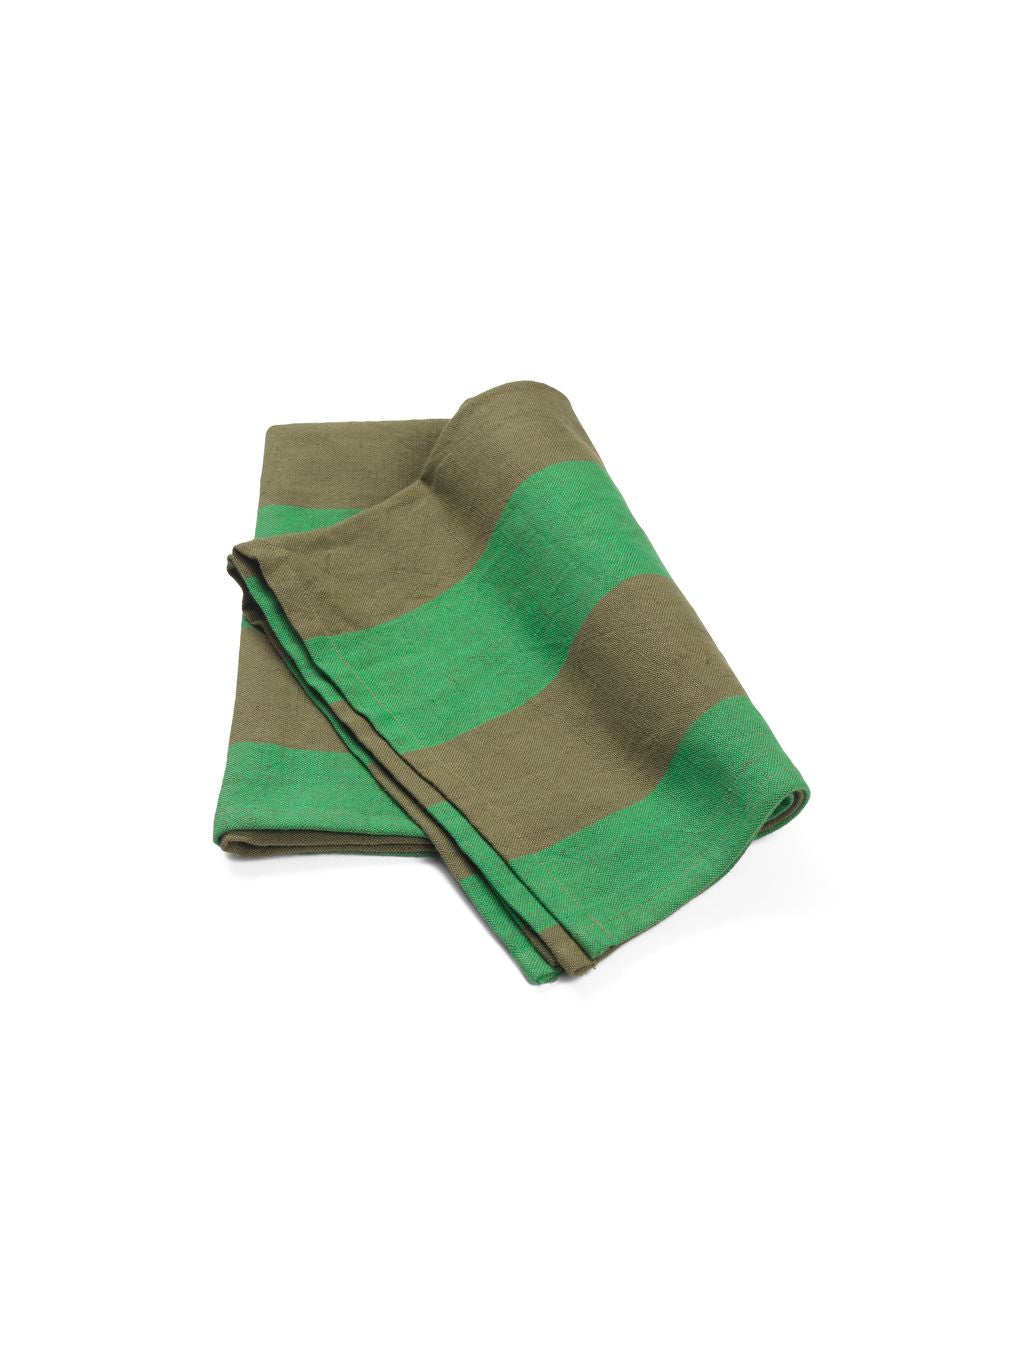 Ferm Living Hale茶巾，橄榄/绿色